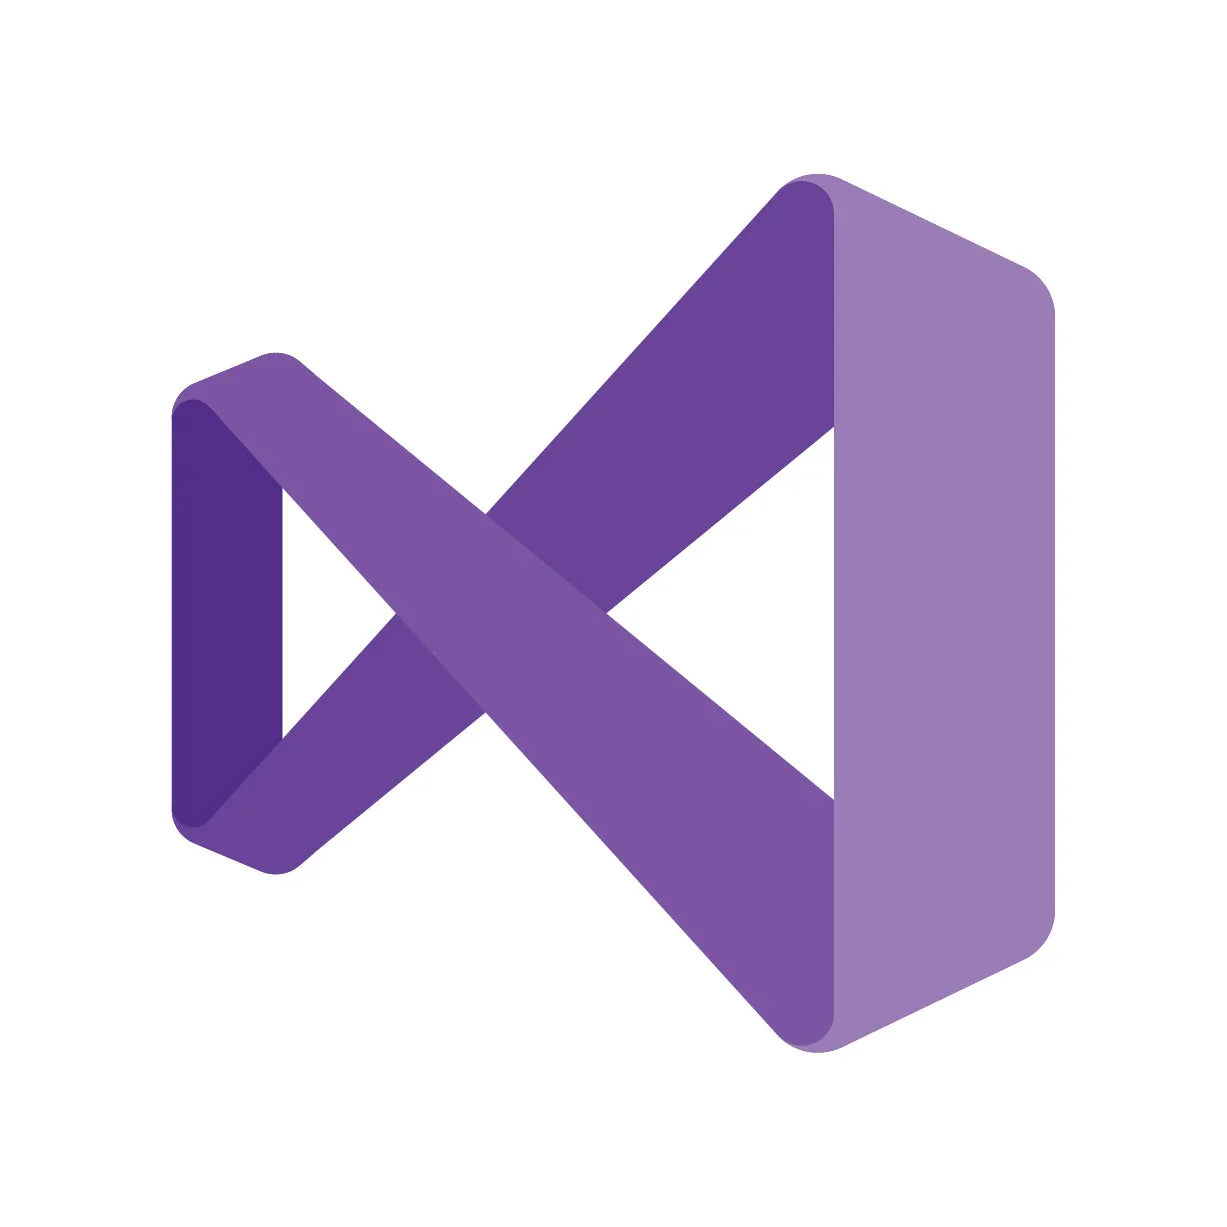 Microsoft Visual Studio 2022 Professional - Lifetime License Key